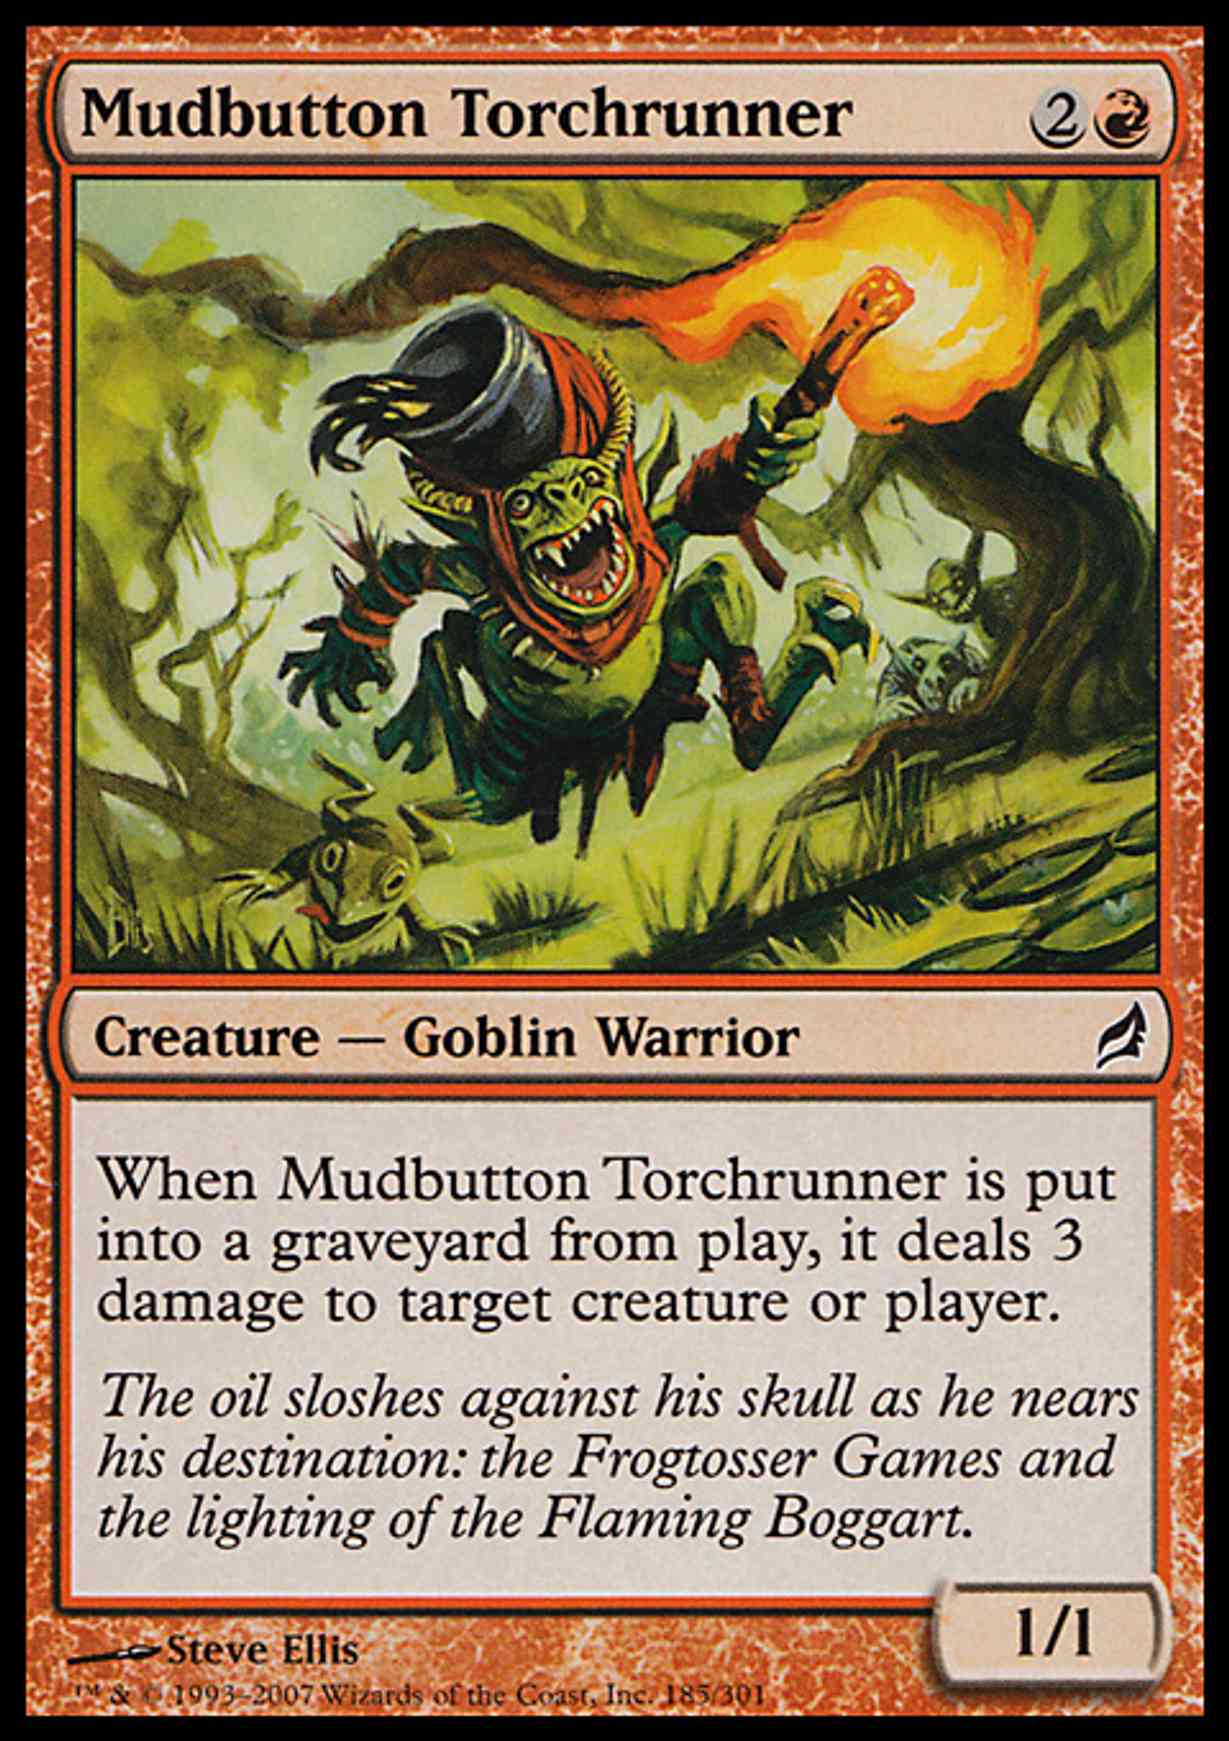 Mudbutton Torchrunner magic card front